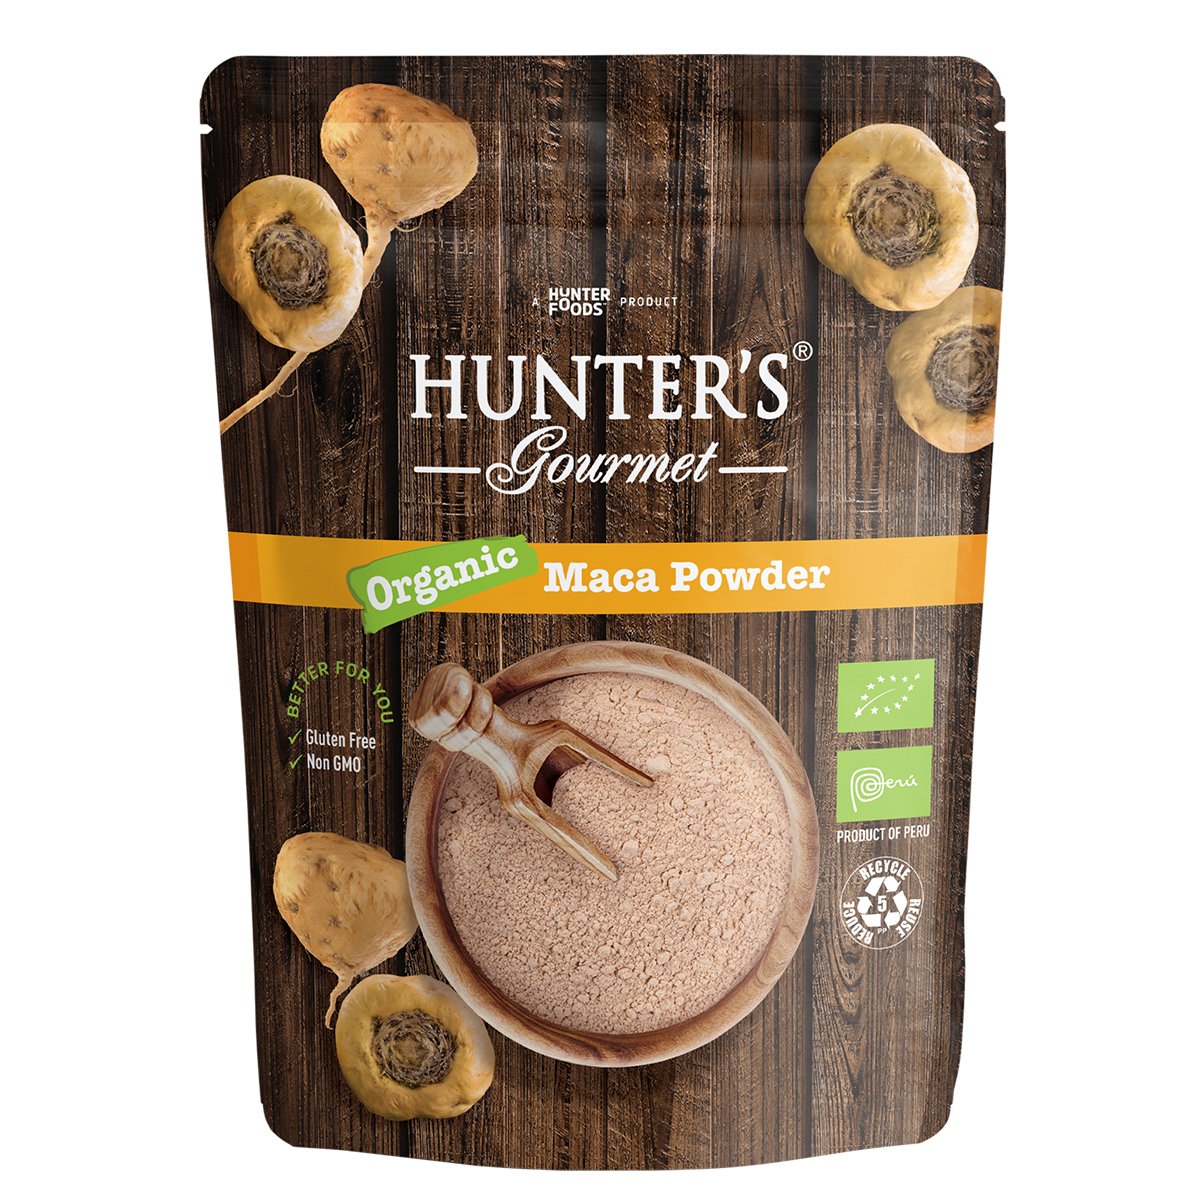 HUNTER'S GOURMET Organic Maca Powder, 150g